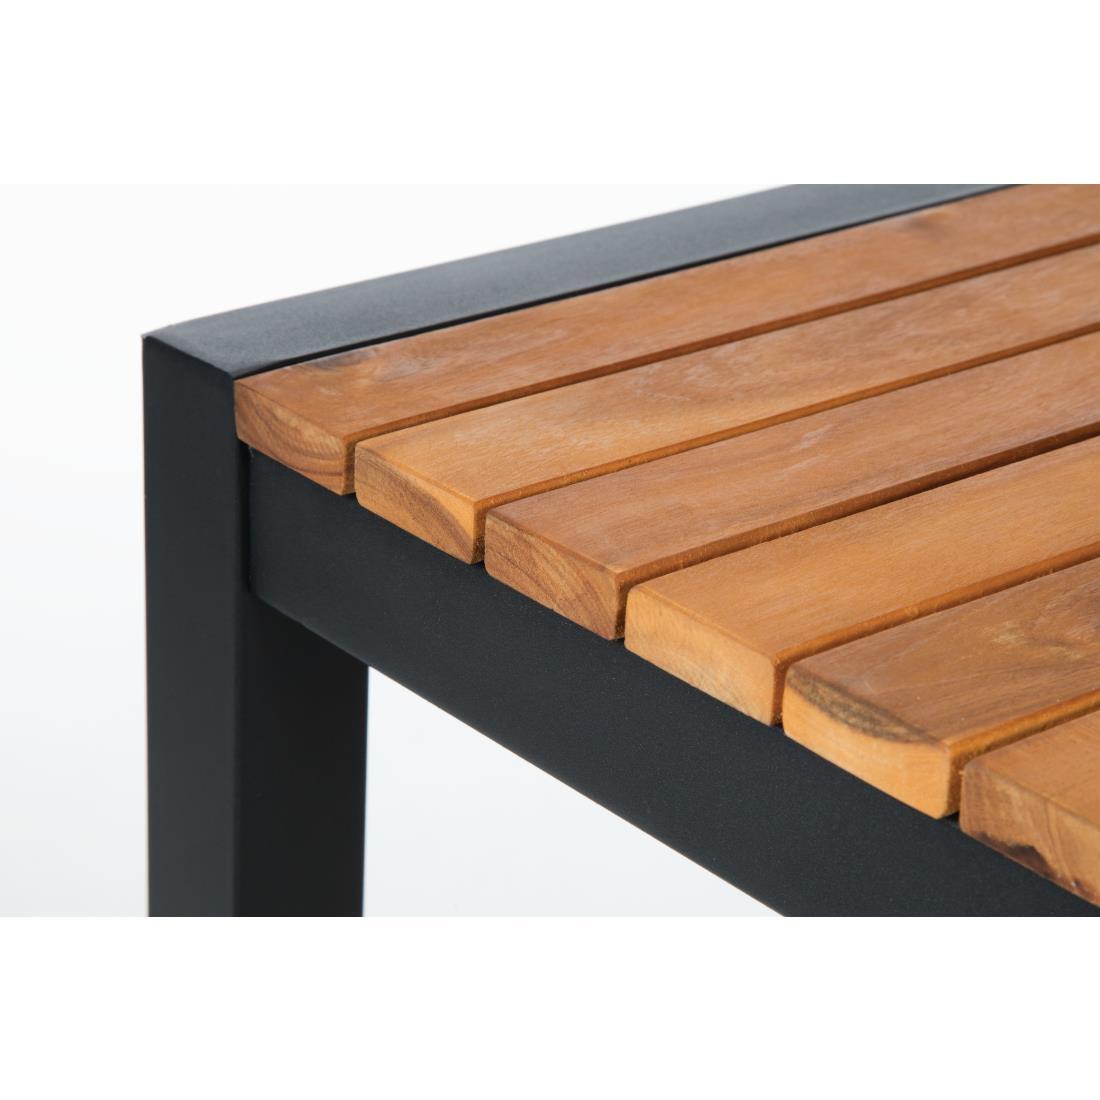 Bolero Square Steel and Acacia Bar Table 600mm - DS155  - 6